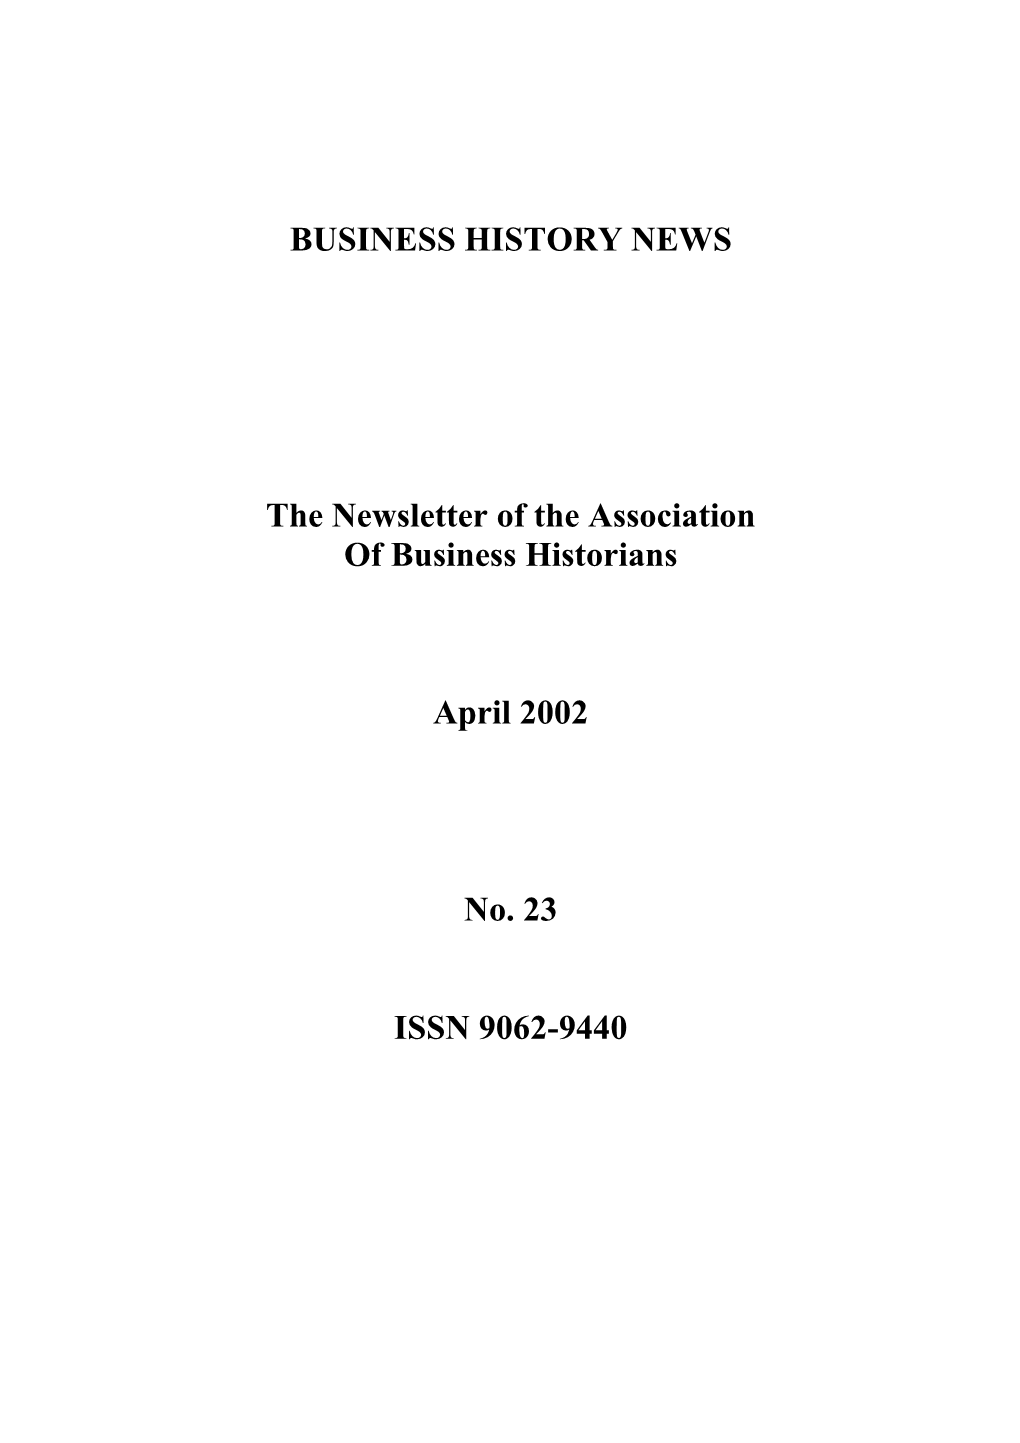 Business History News